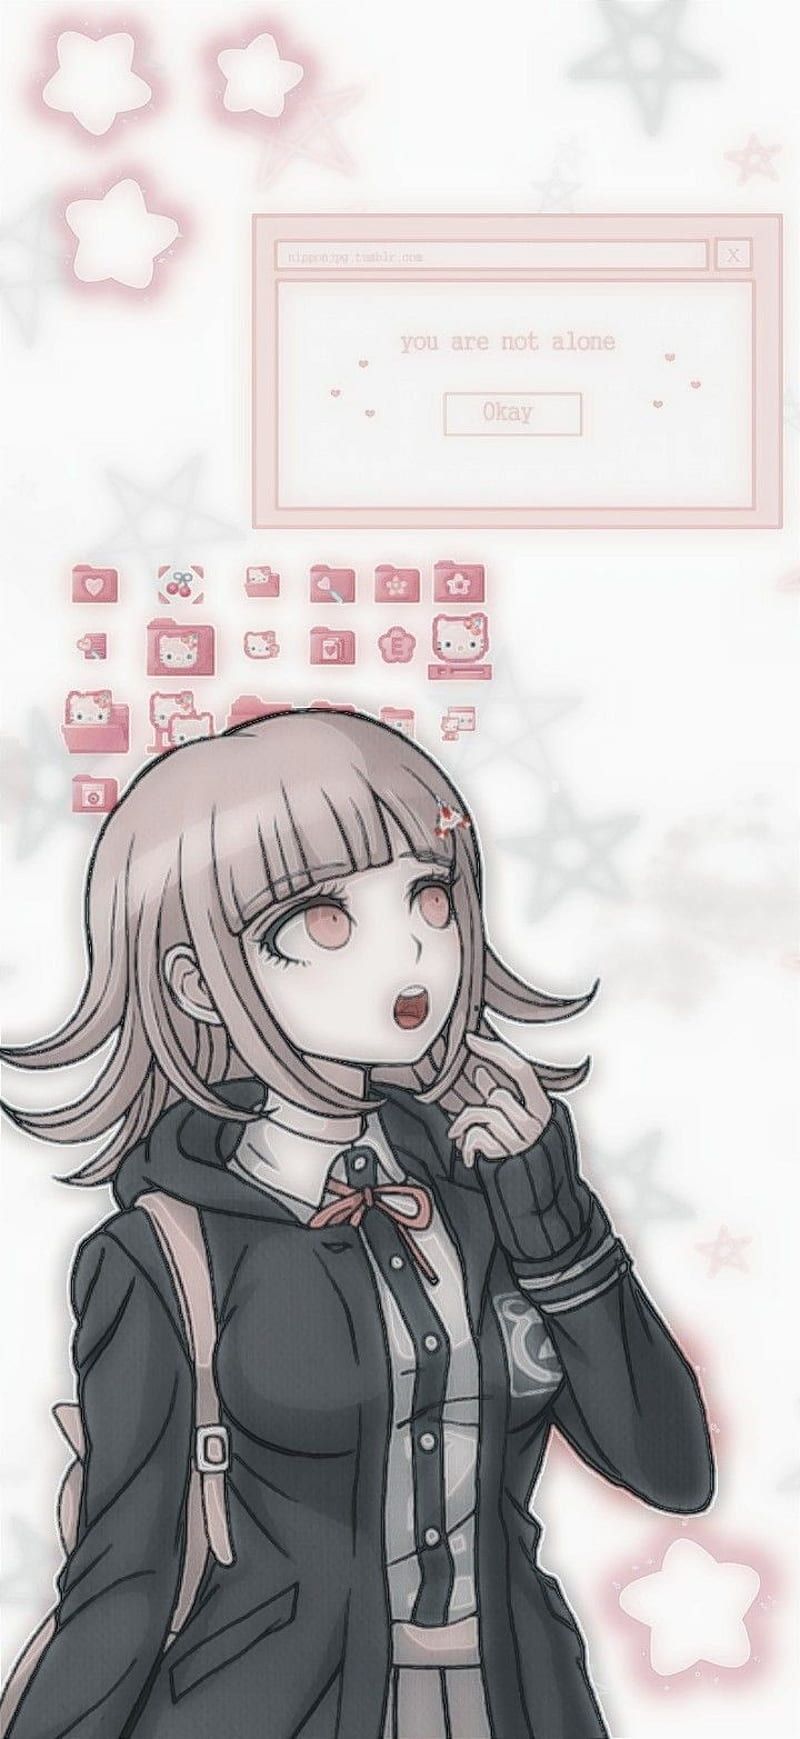 Anime aesthetic phone backgrounds, anime girl with pink hair - Danganronpa